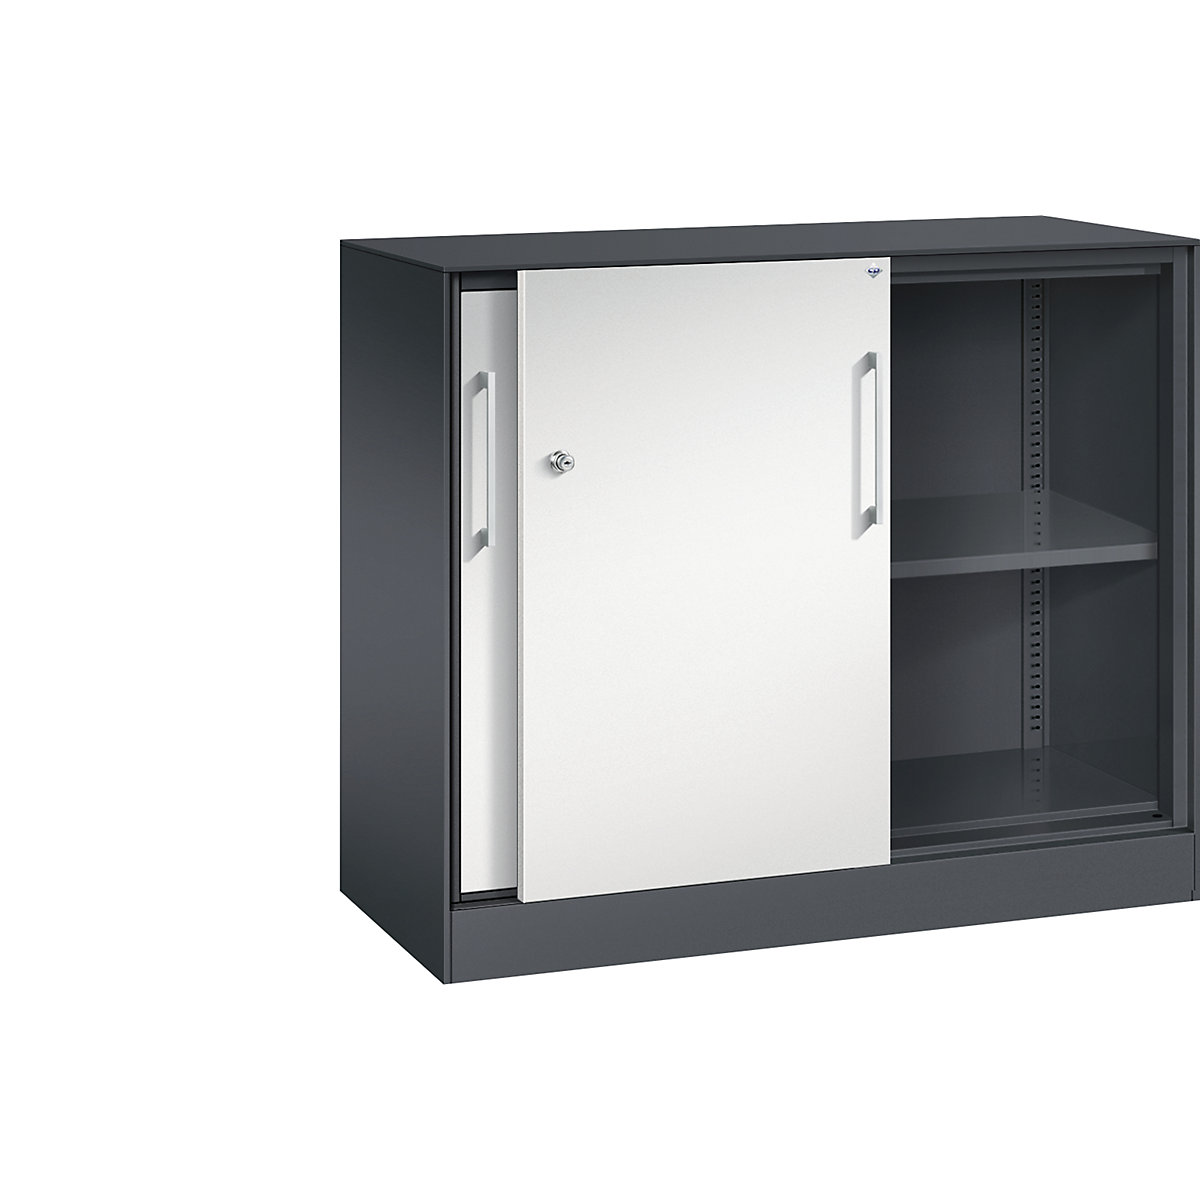 C+P – Skříň s posuvnými dveřmi ASISTO, výška 897 mm, šířka 1000 mm, černošedá/světlá šedá